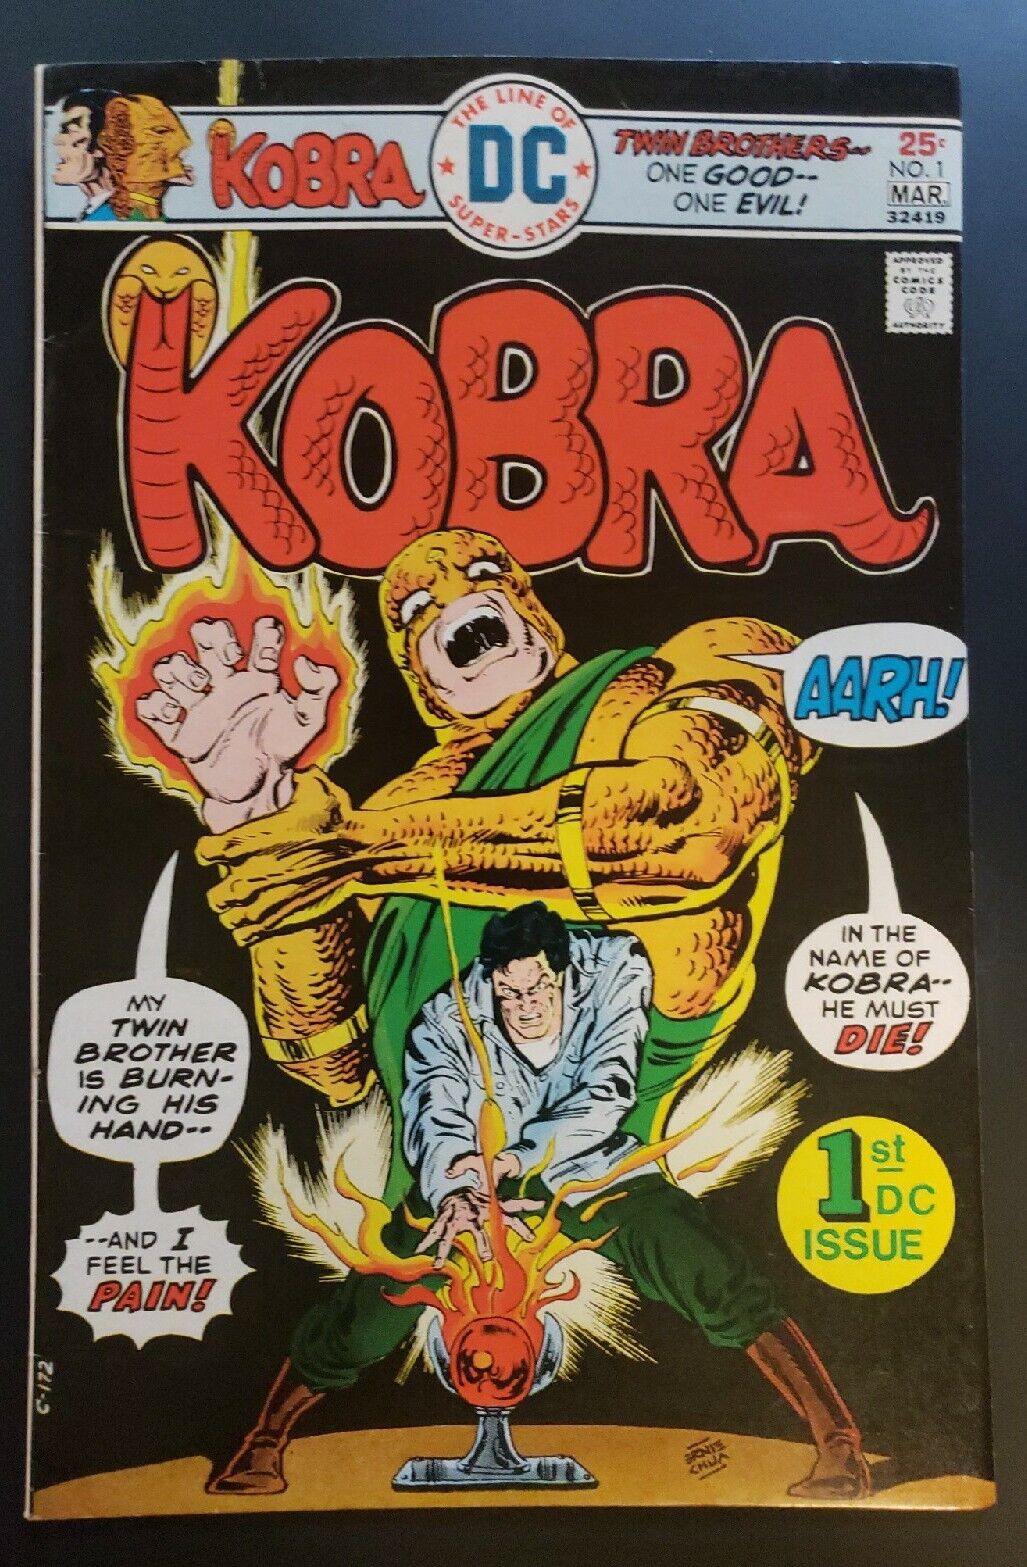 Kobra #1 DC Comics 1976 1st Appearance Key Issue